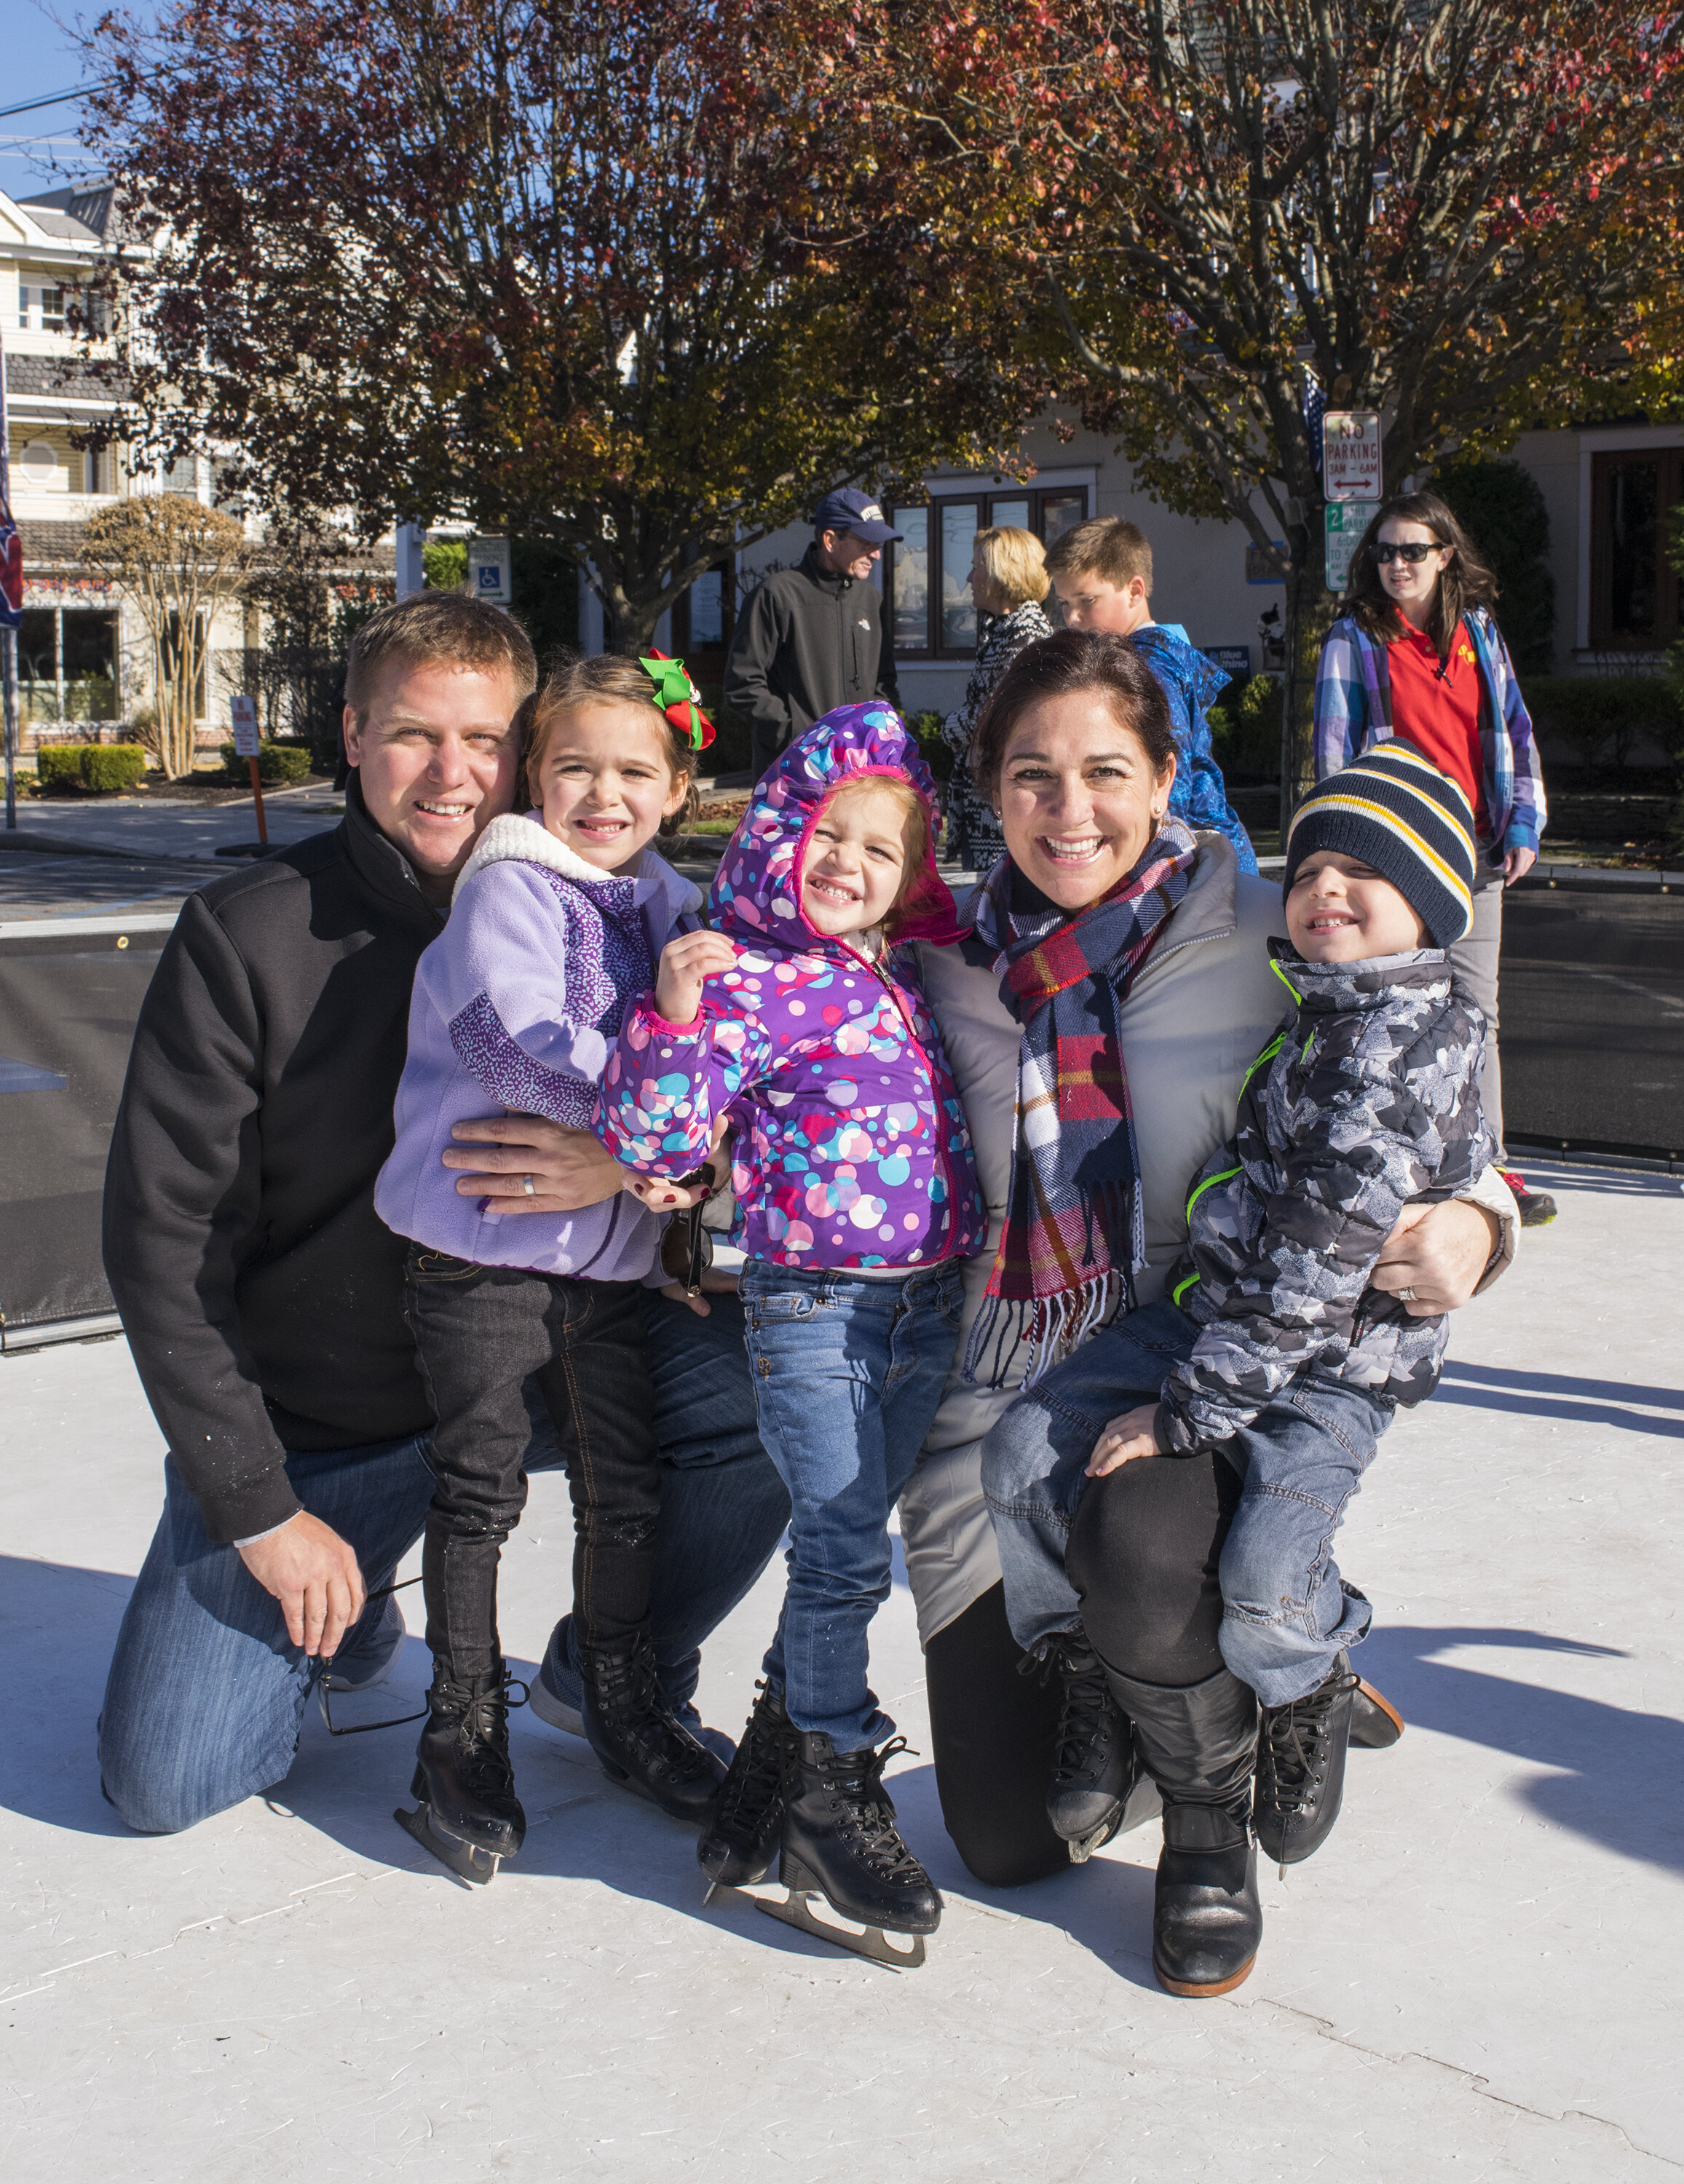 The Stever family enjoying the ice skating rink at Avalon’s Festive Friday.